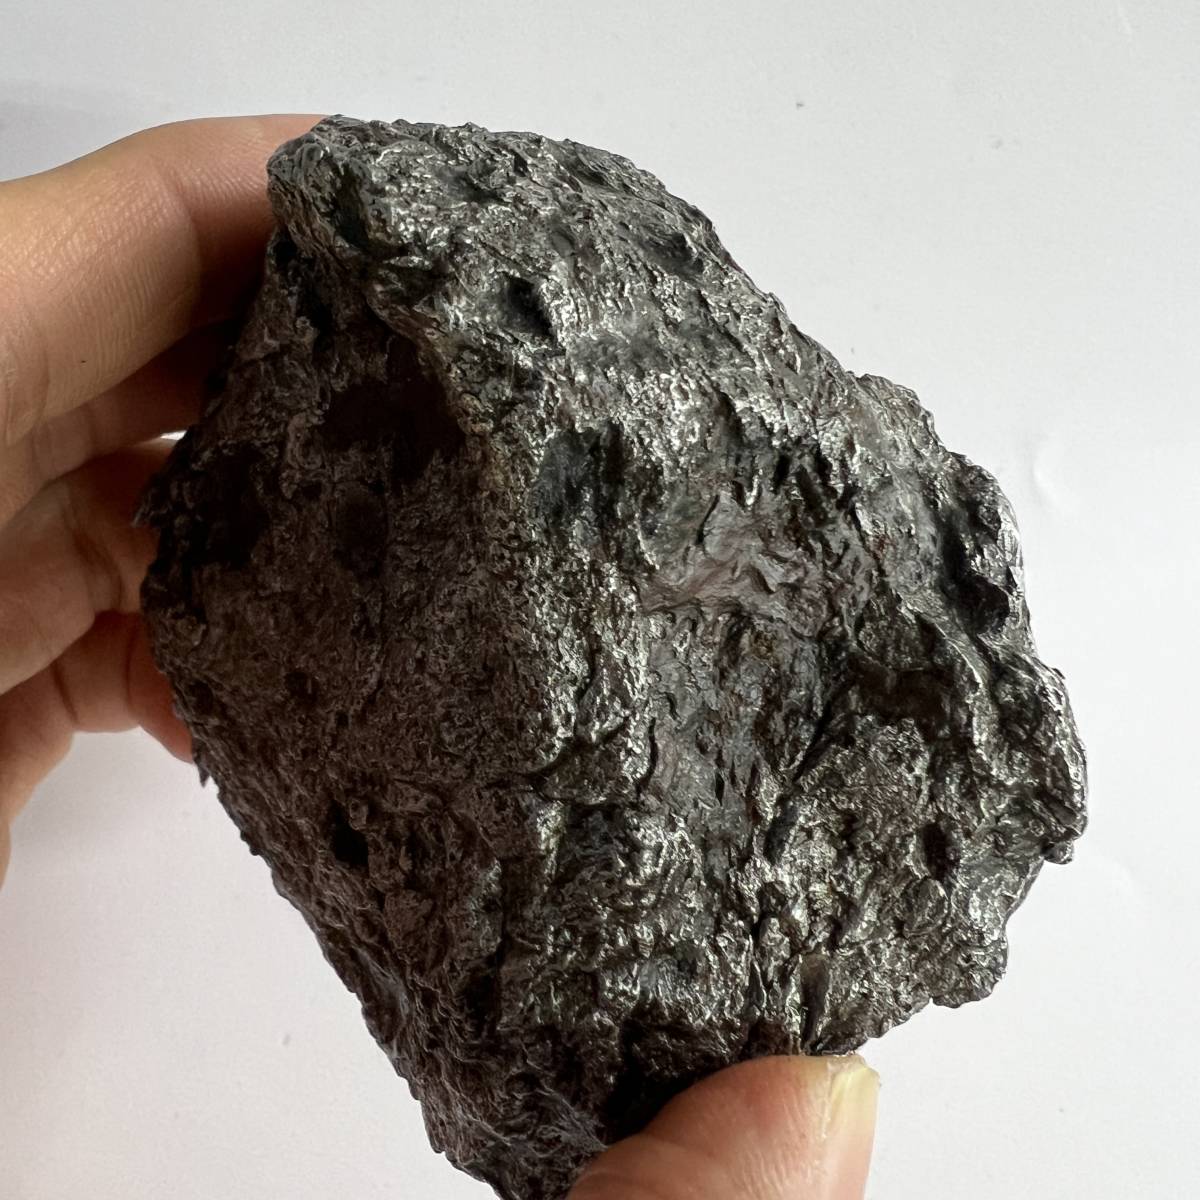 【E22242】カンポ・デル・シエロ隕石 隕石 隕鉄 メテオライト 天然石 パワーストーン カンポ